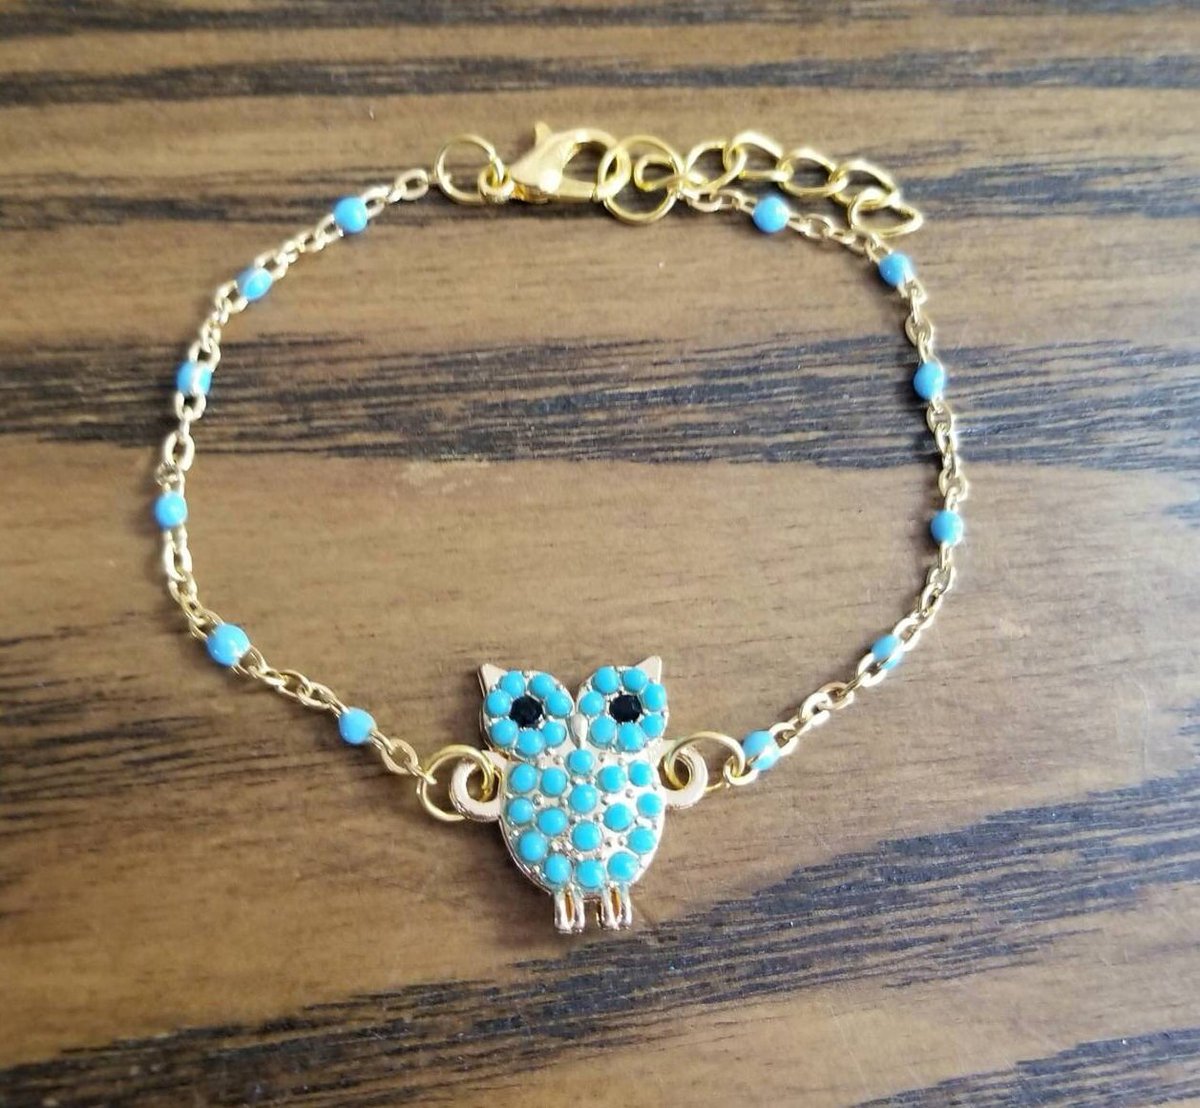 Gold Owl Anklet, Owl Ankle Bracelet, Turquoise Beaded Owl Anklet #owl #owls #bird #birds #jewelry #anklet #anklets #anklebracelets #giftsforhe #goldanklet #beadedanklet #etsy #etsyjewelry #summerfashion #fashion #style #womensfashion 

 etsy.me/3CeP8ah via @Etsy